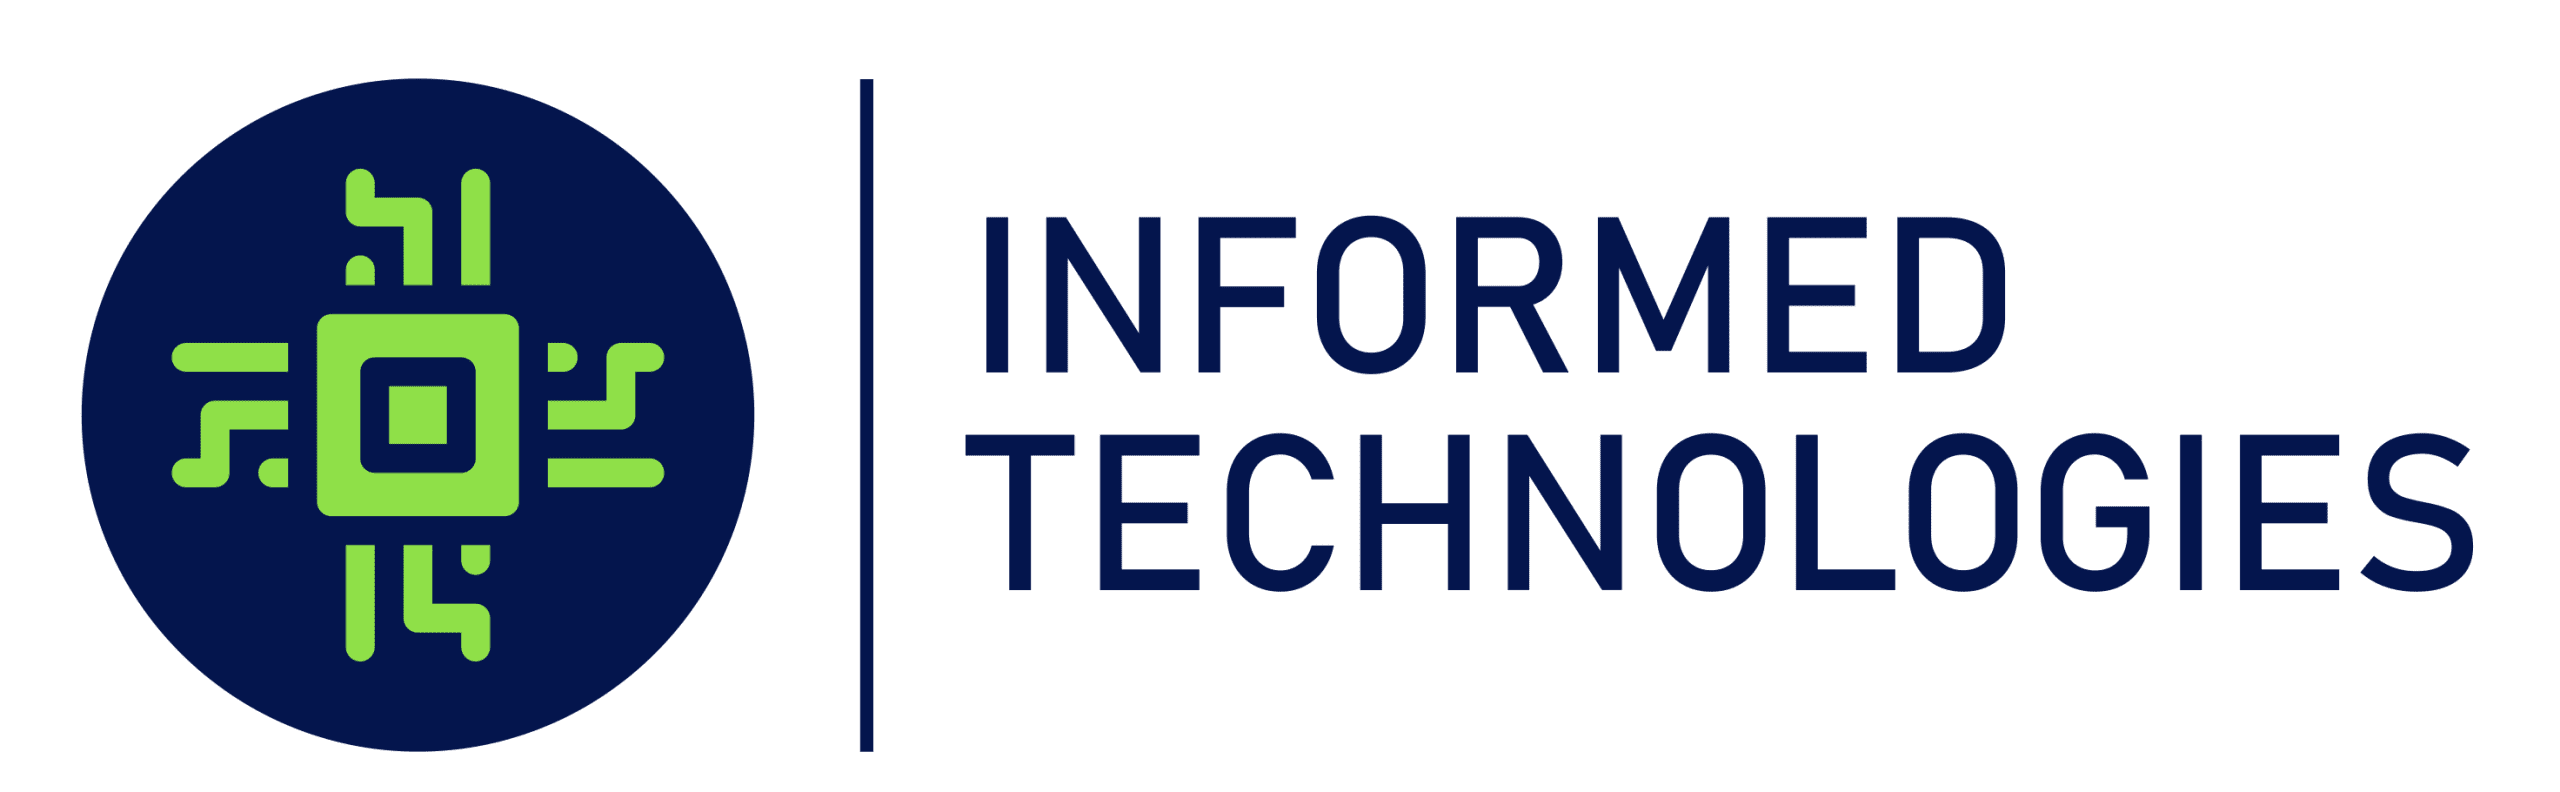 Informed Technologies India Ltd. logo